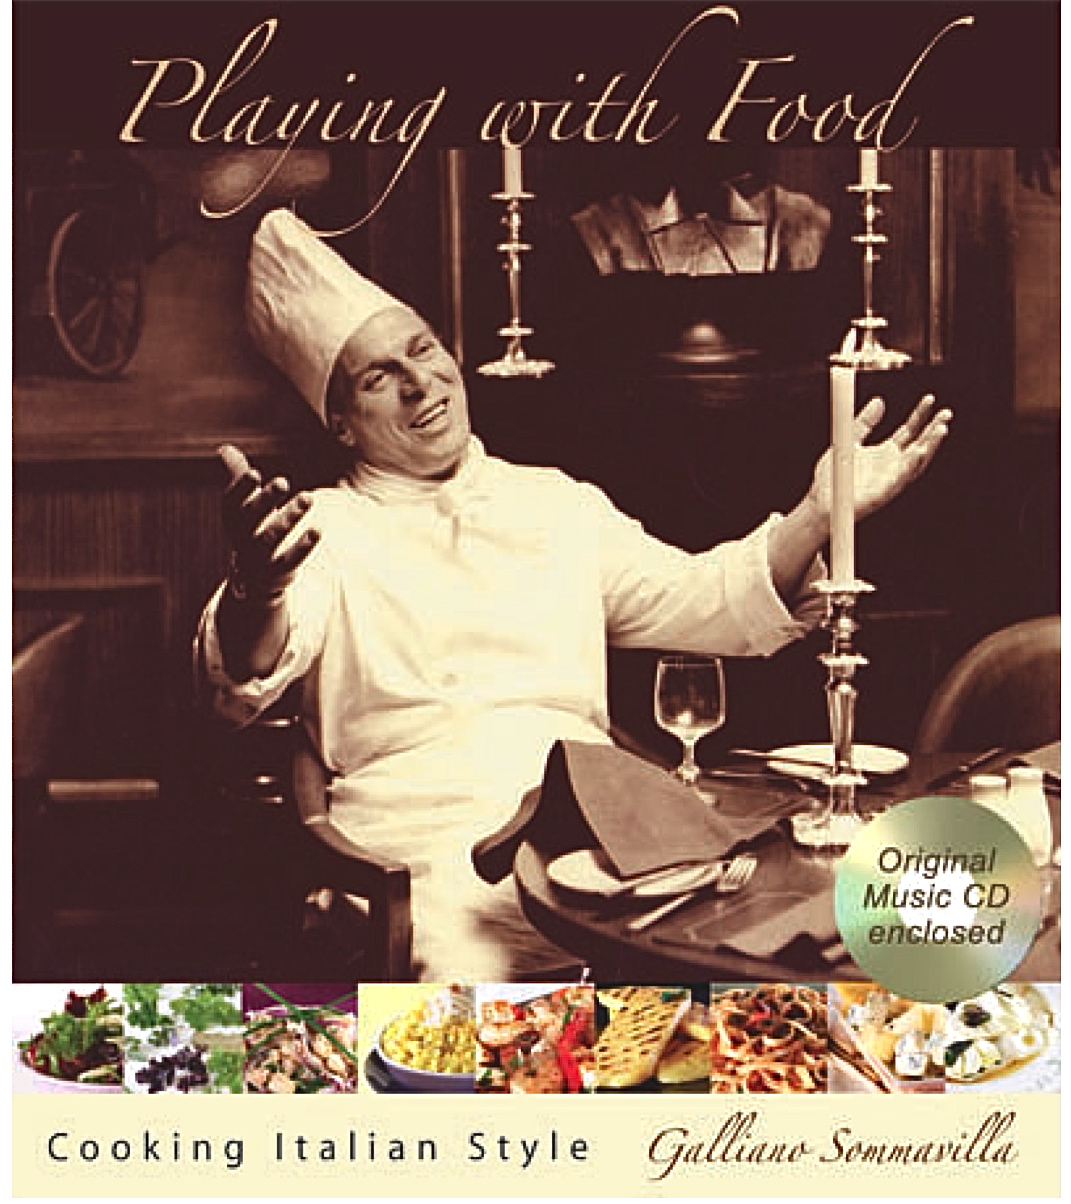 Playing with Food - Italian cookbook with accompanying original music - by Galliano Sommavilla Published 2006 Brolga Publishing